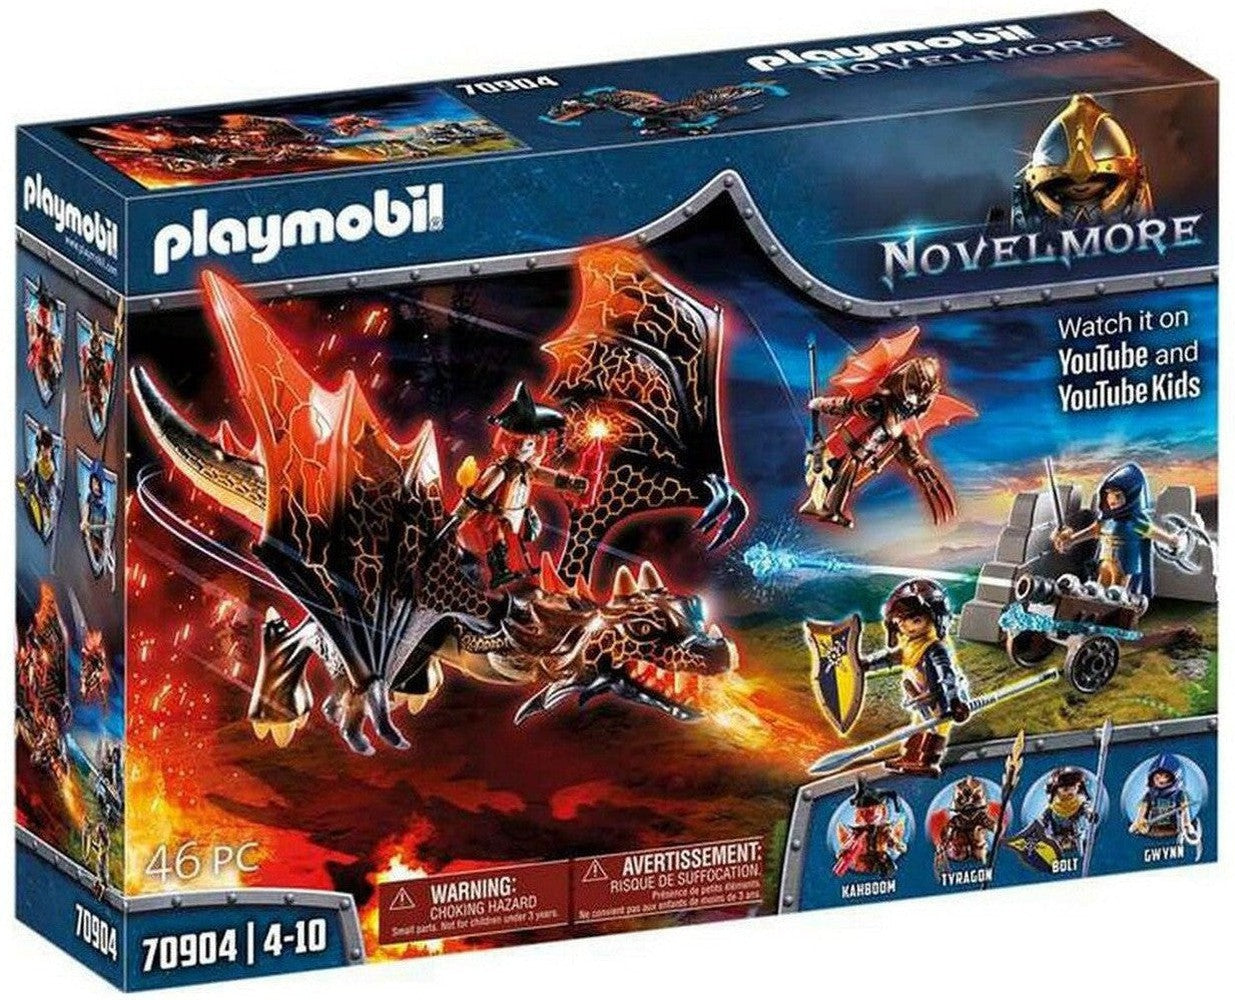 Playset Playmobil Novelmore Dragon Attack 70904